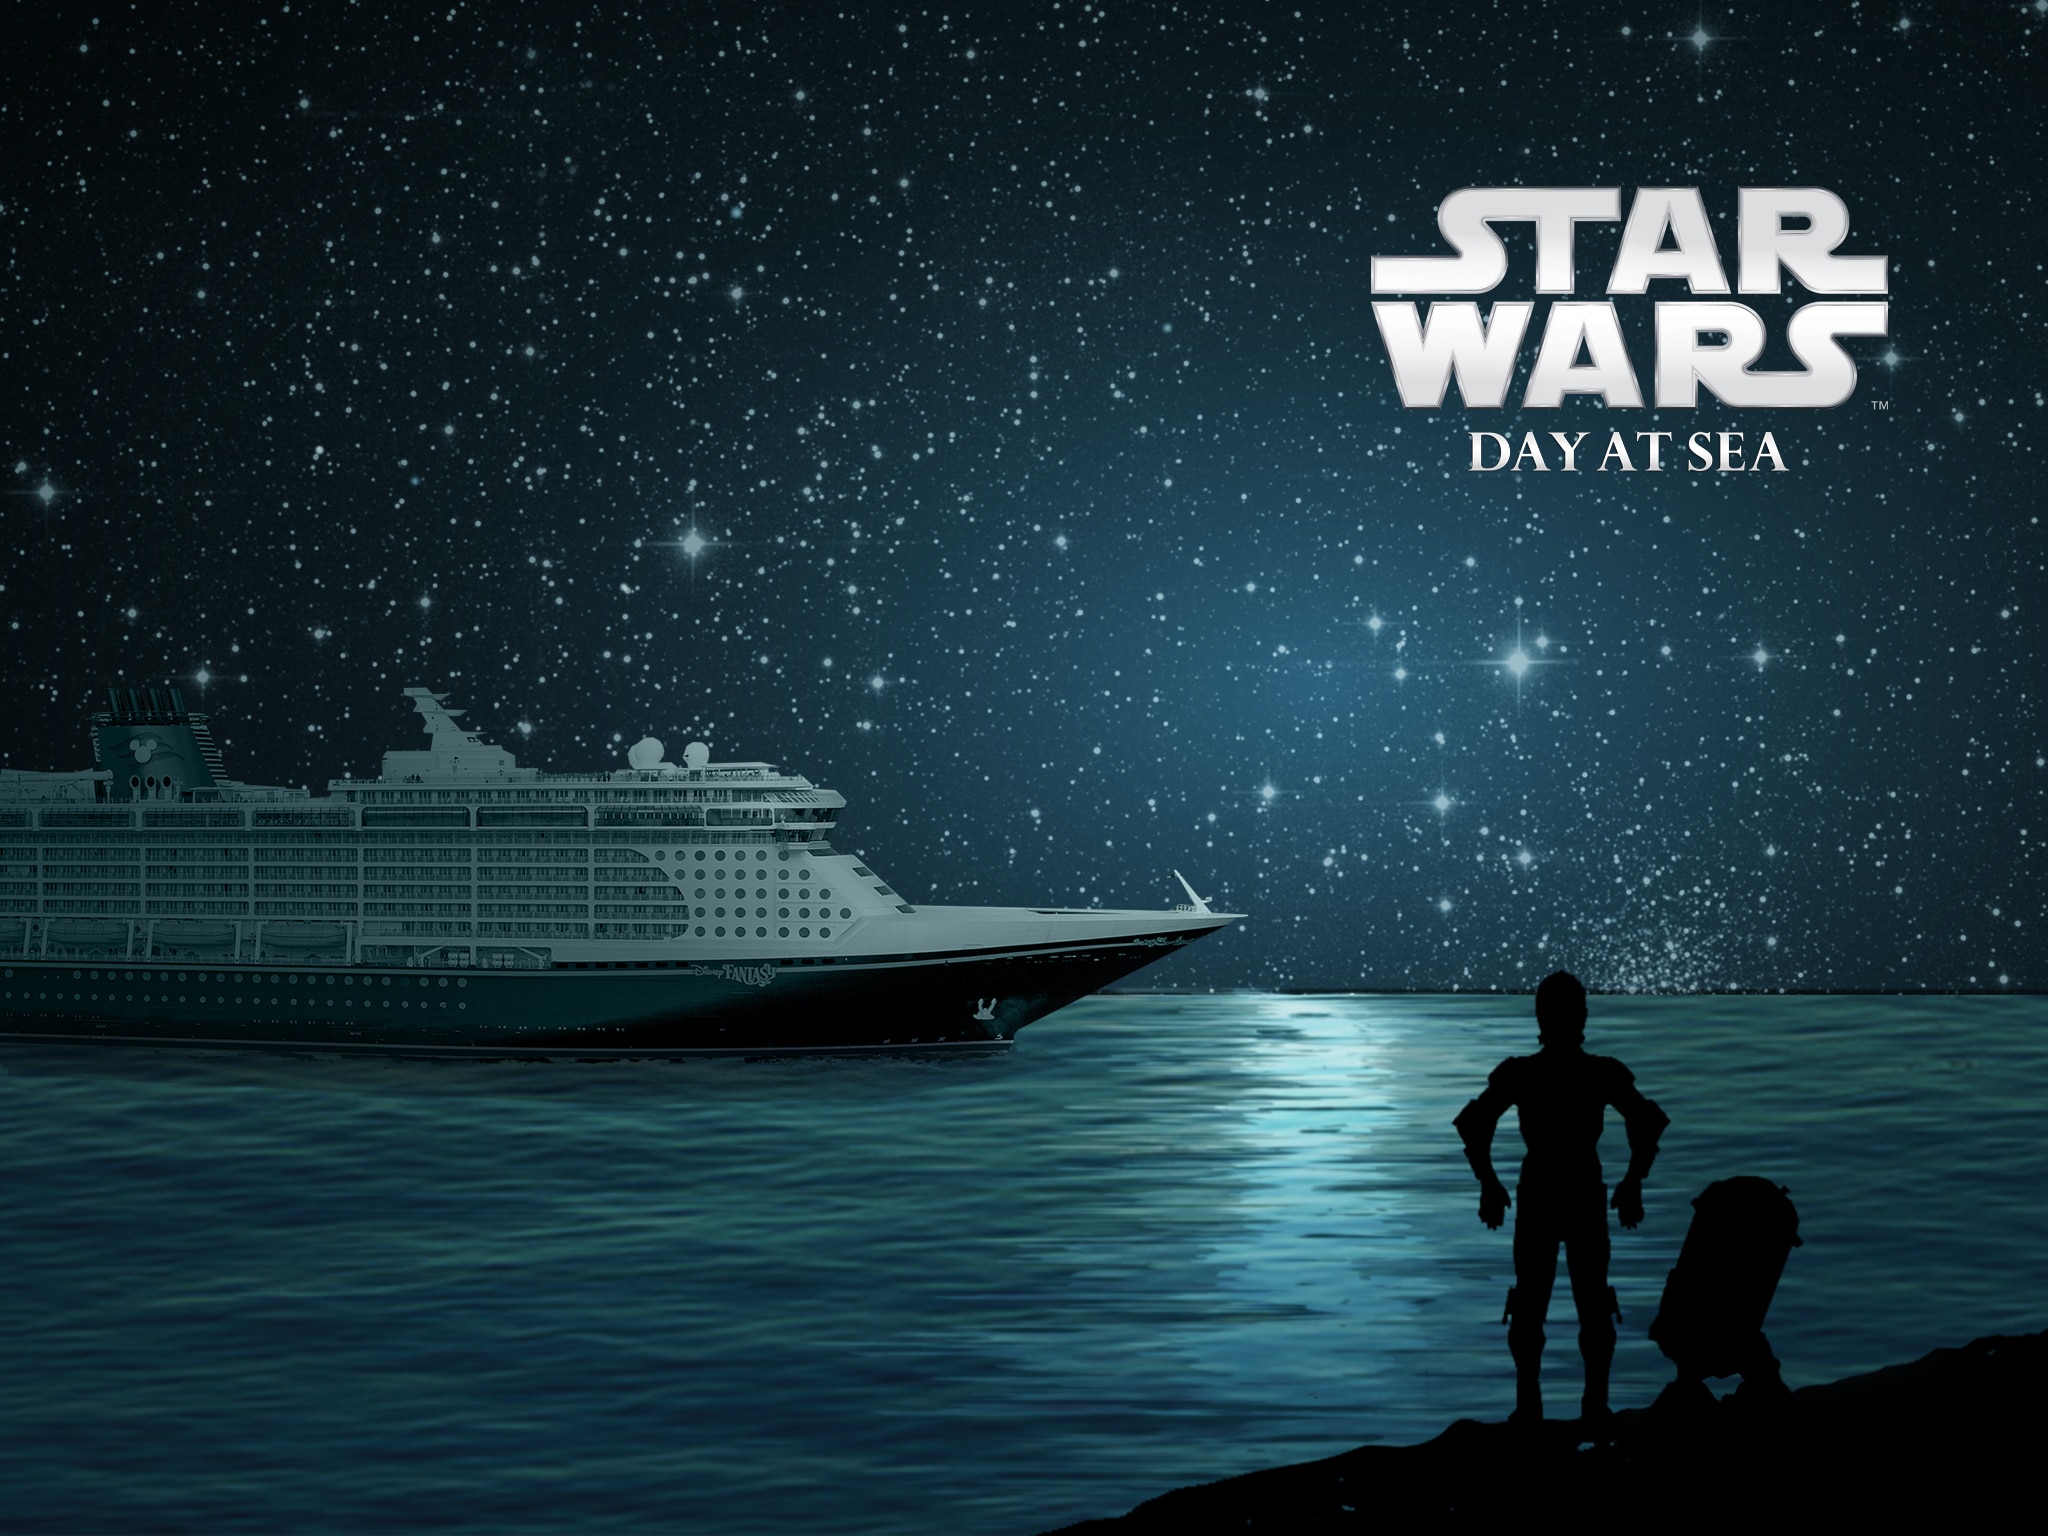 Star Wars Day At Sea Wallpaper Desktop Ipad Disney Parks Blog